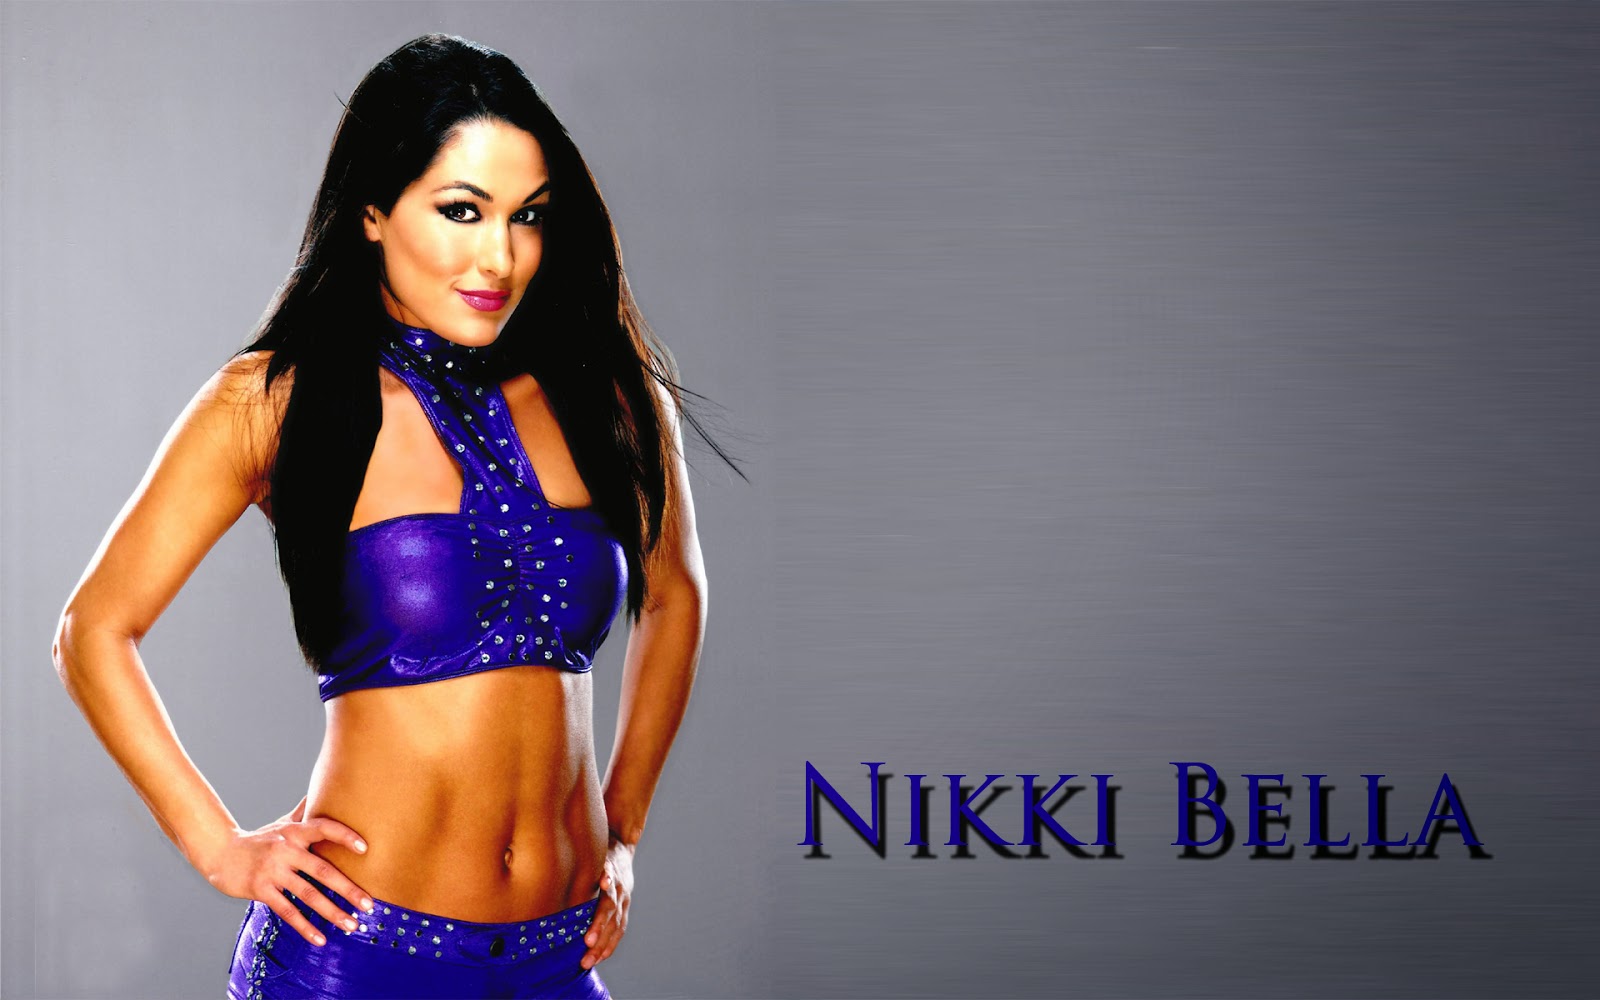 WWE Divas Images and Latest Sports News: Nikki Bella High Definesen Wallpapers Free ...